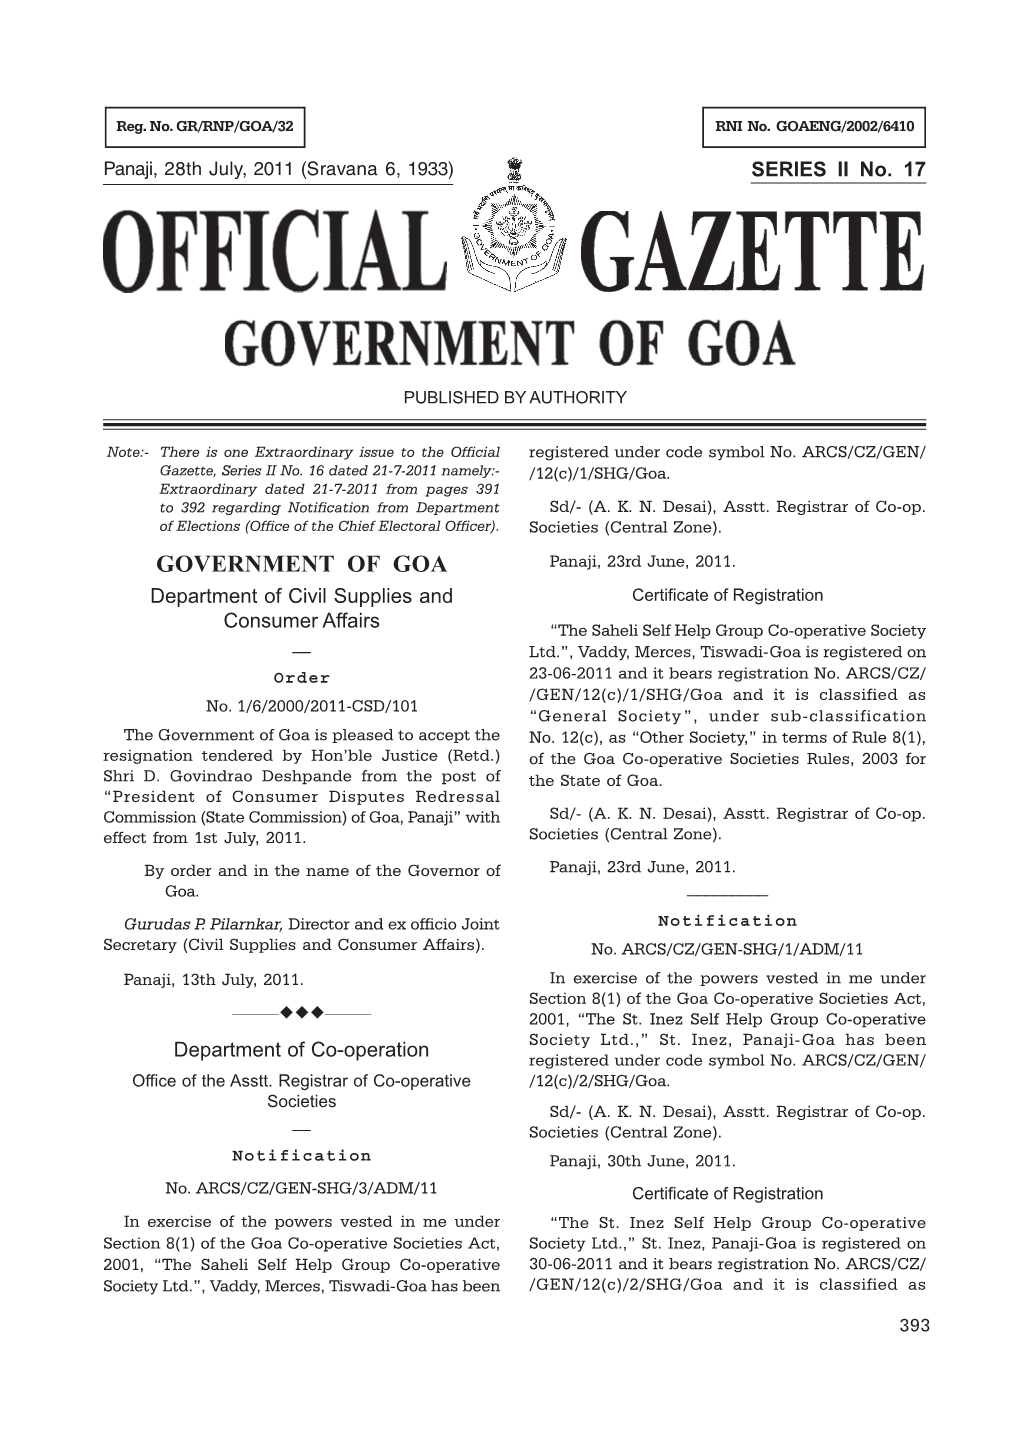 GOVERNMENT of GOA Panaji, 23Rd June, 2011